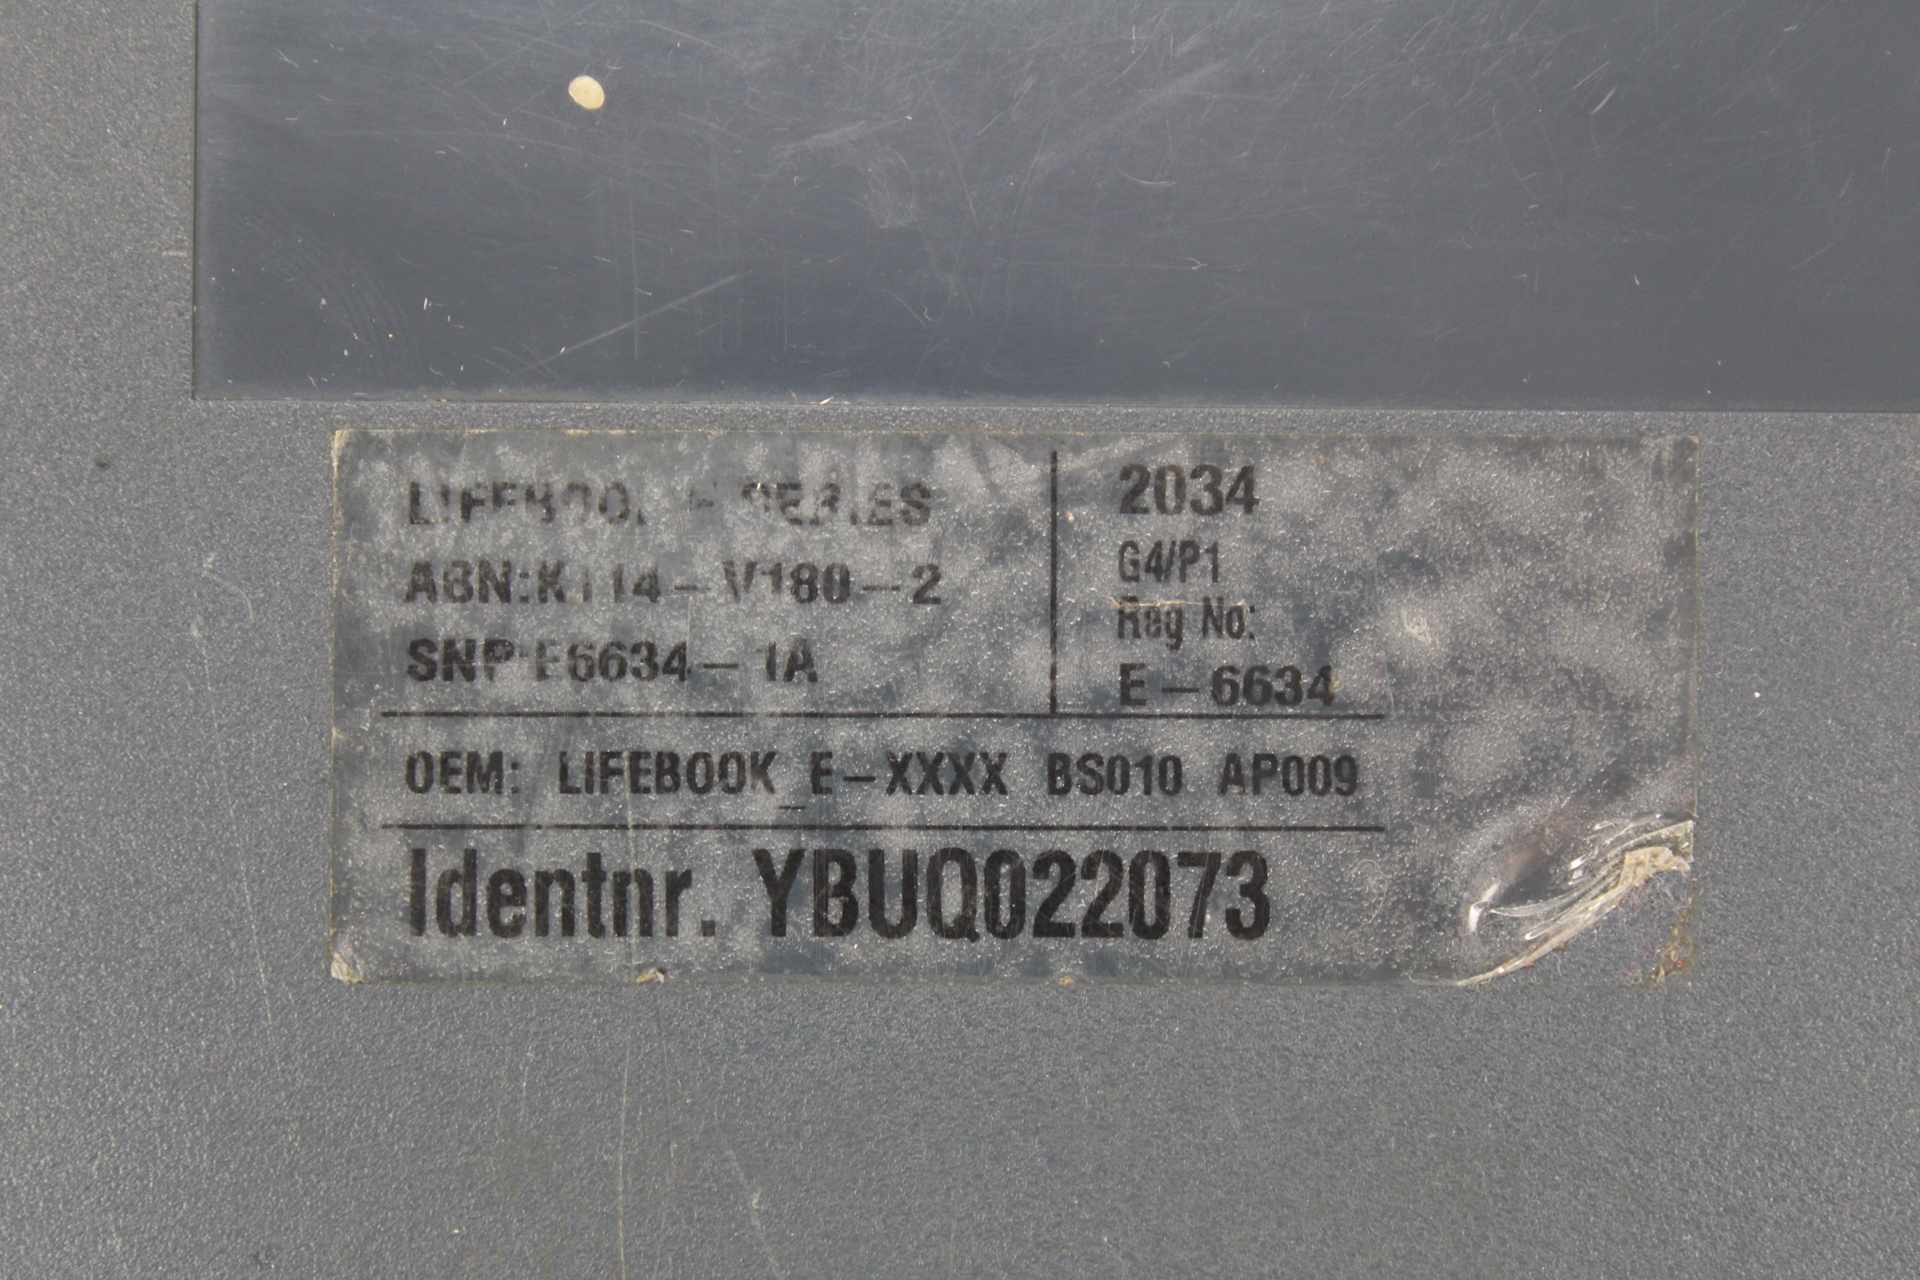 Fujitsu Siemens Lifebook E-6634